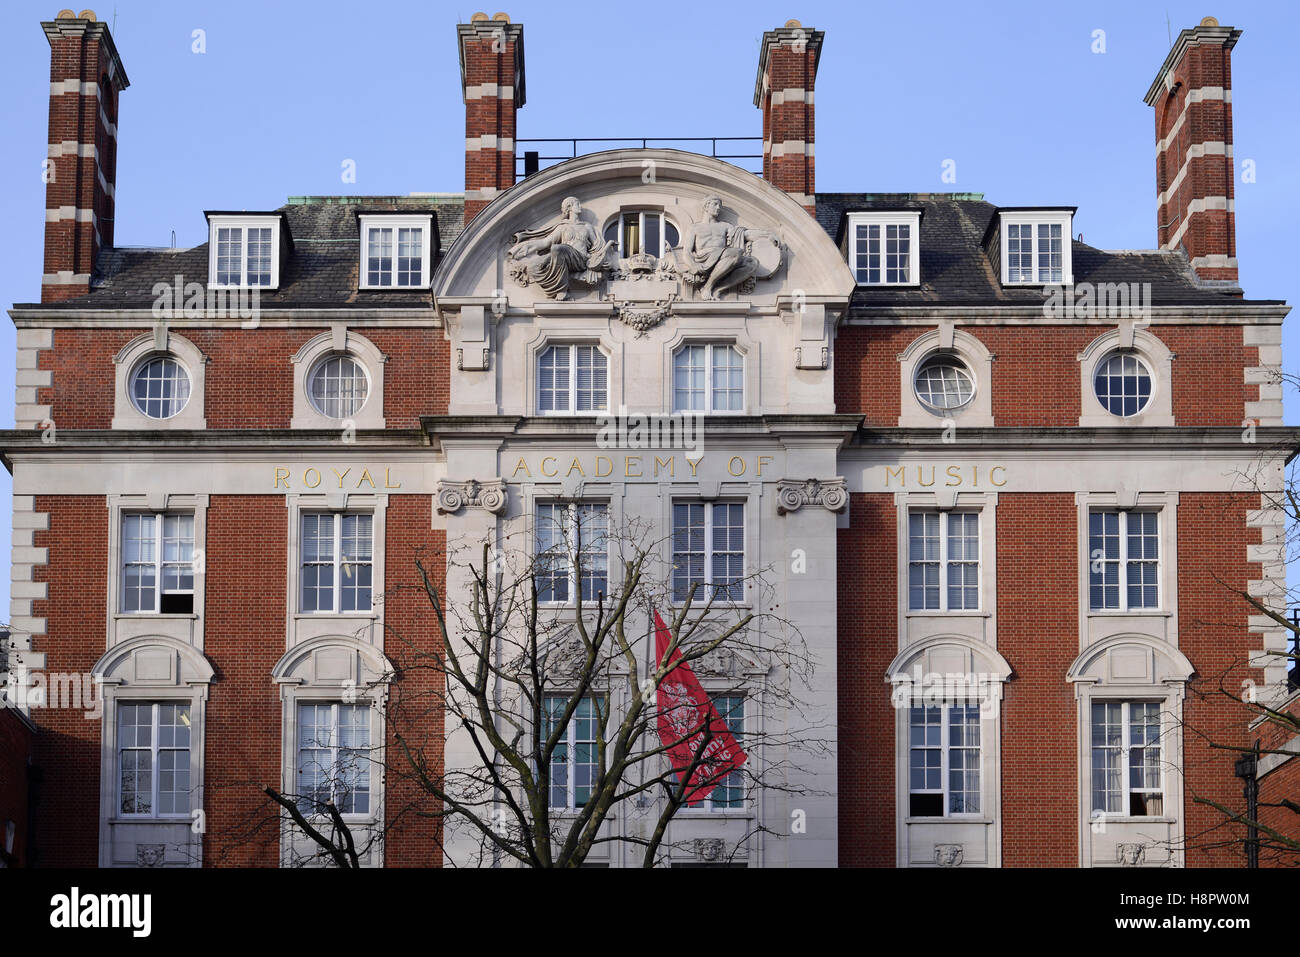 Royal academy of music, London Stock Photo